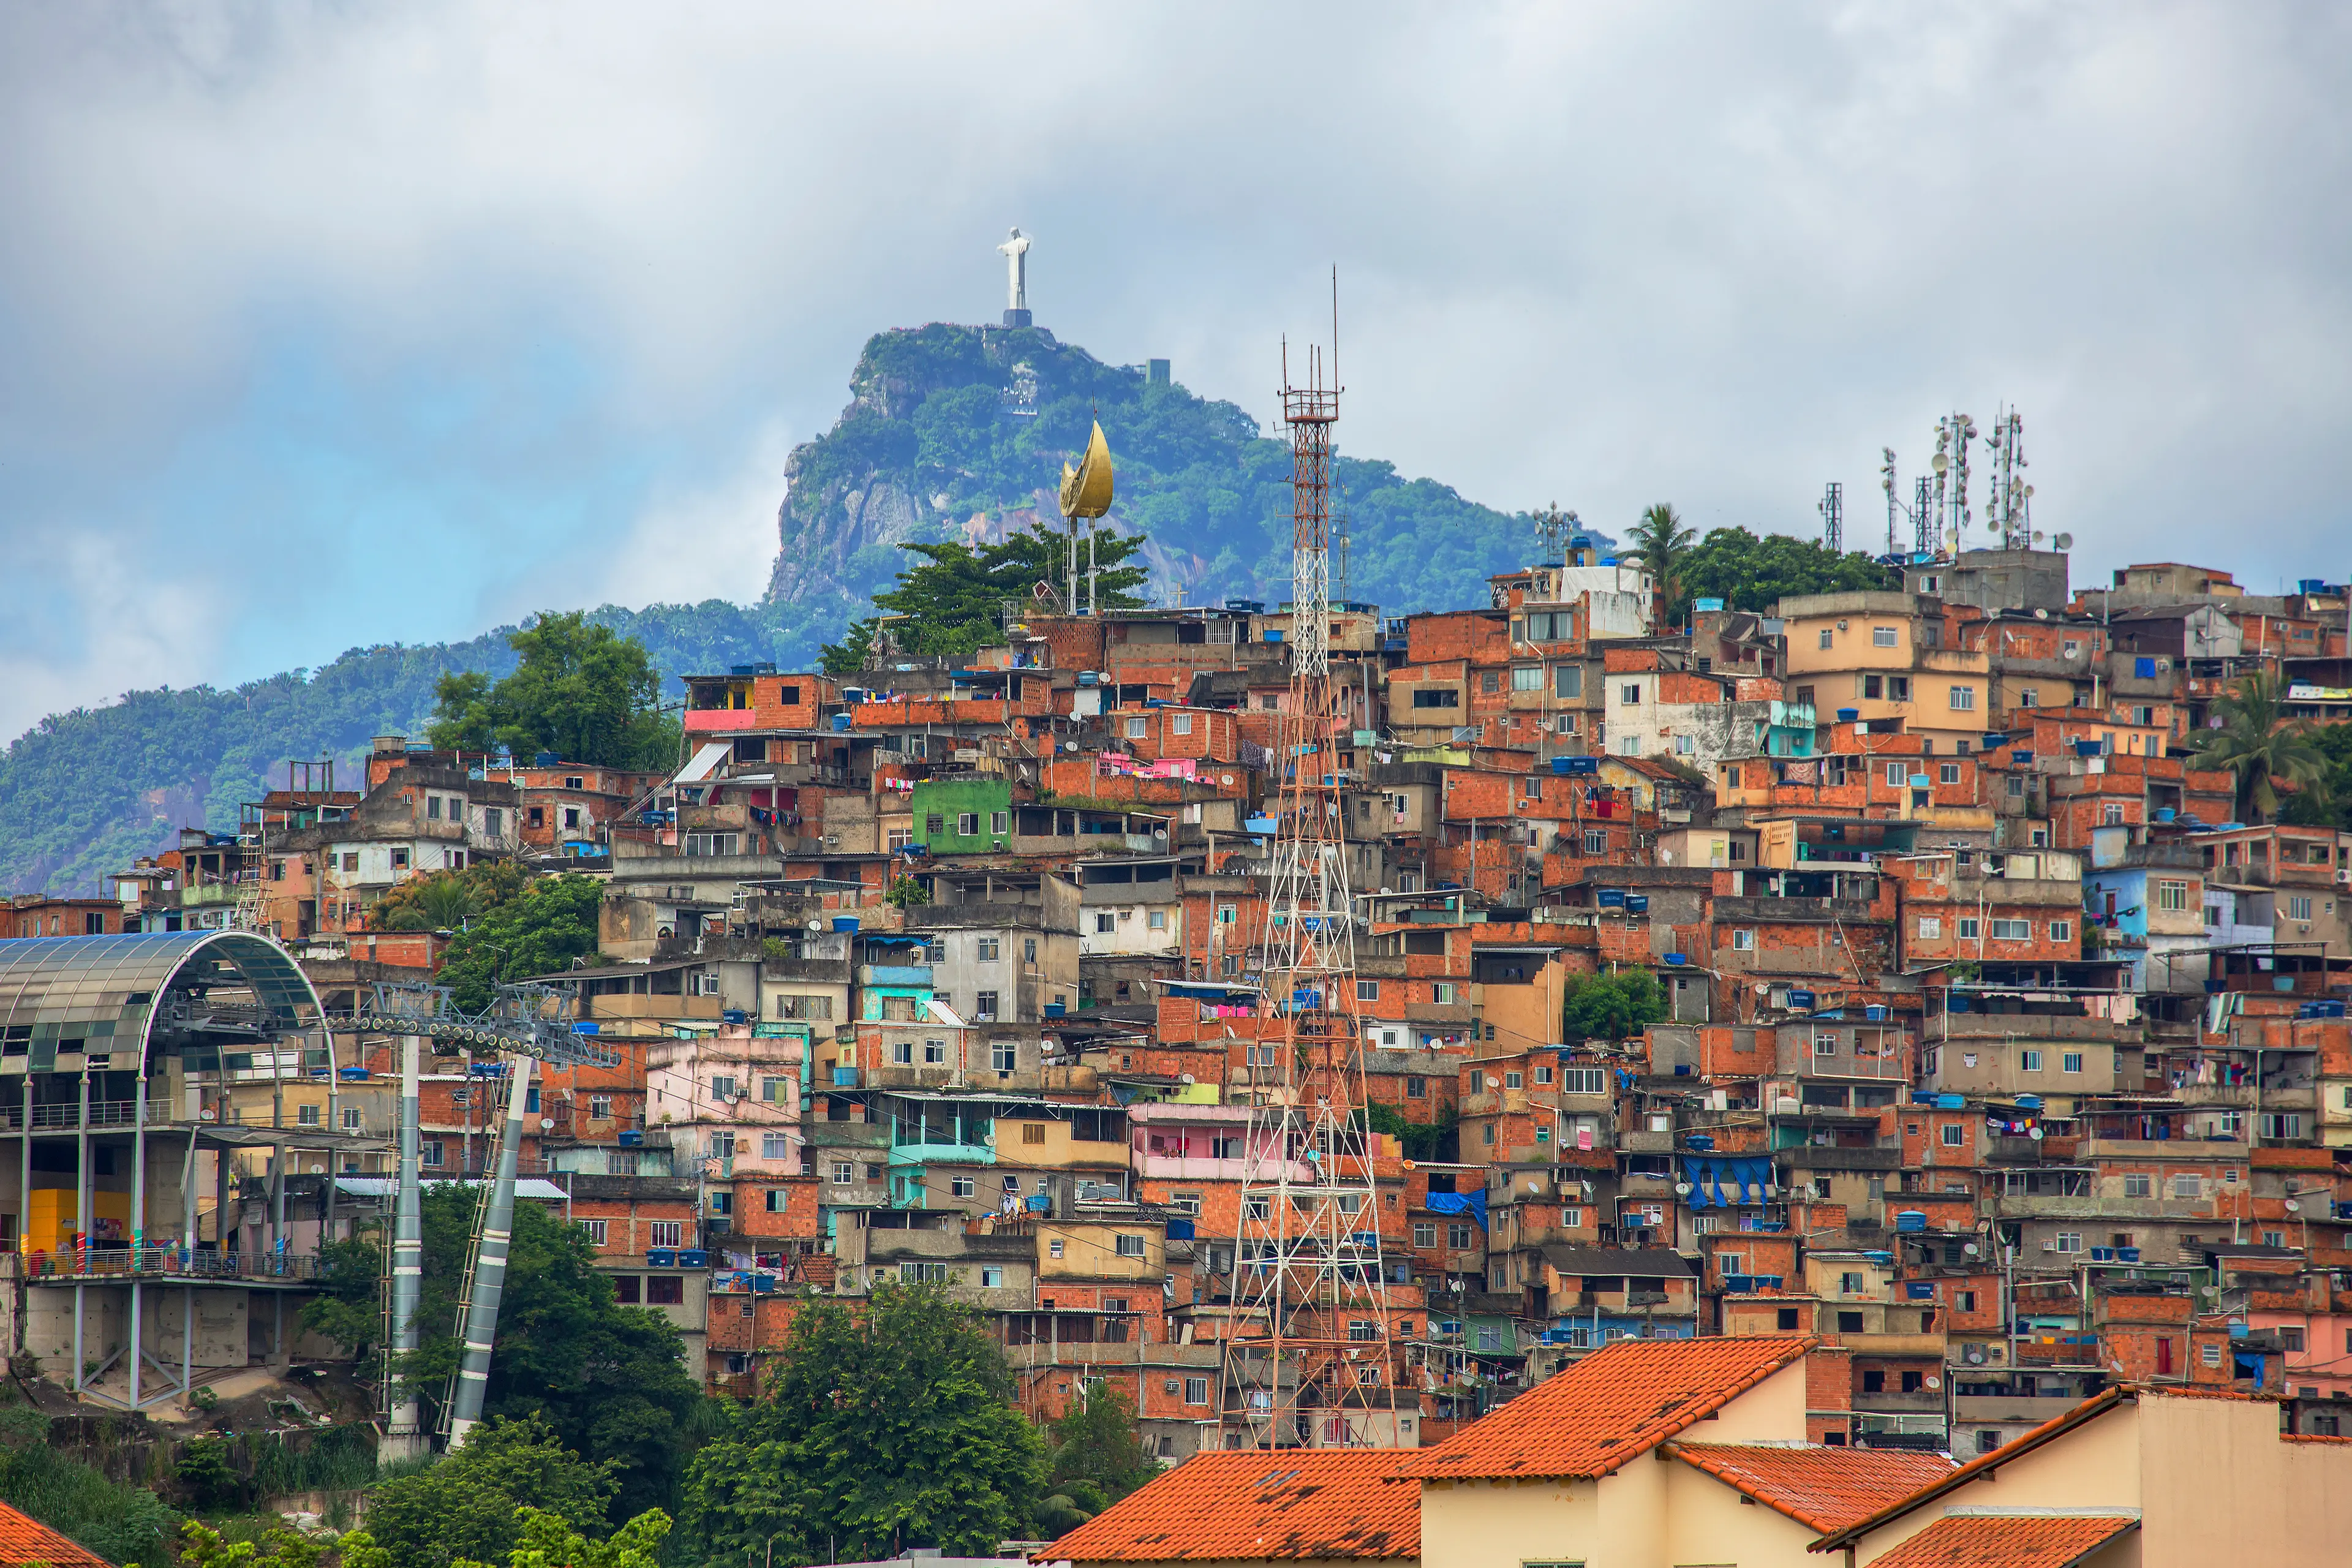 The Morro da Providencia favela